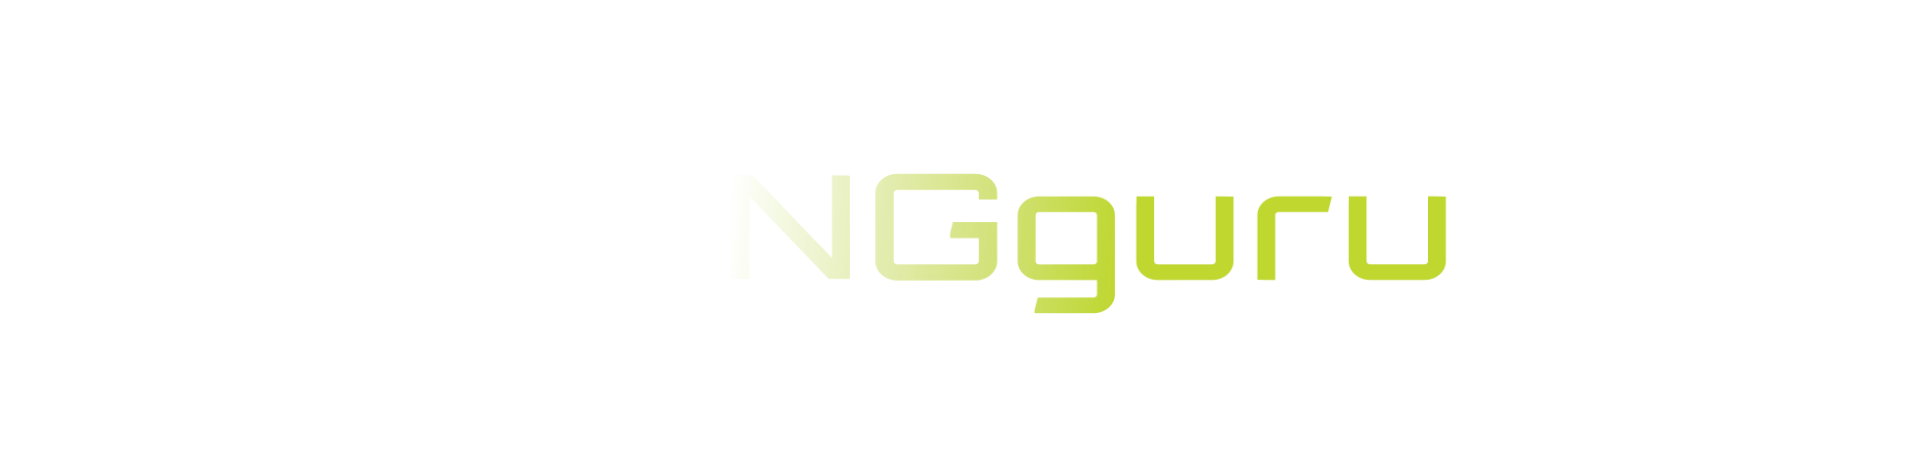 Glazing Guru | Graphic and Text-based Logo